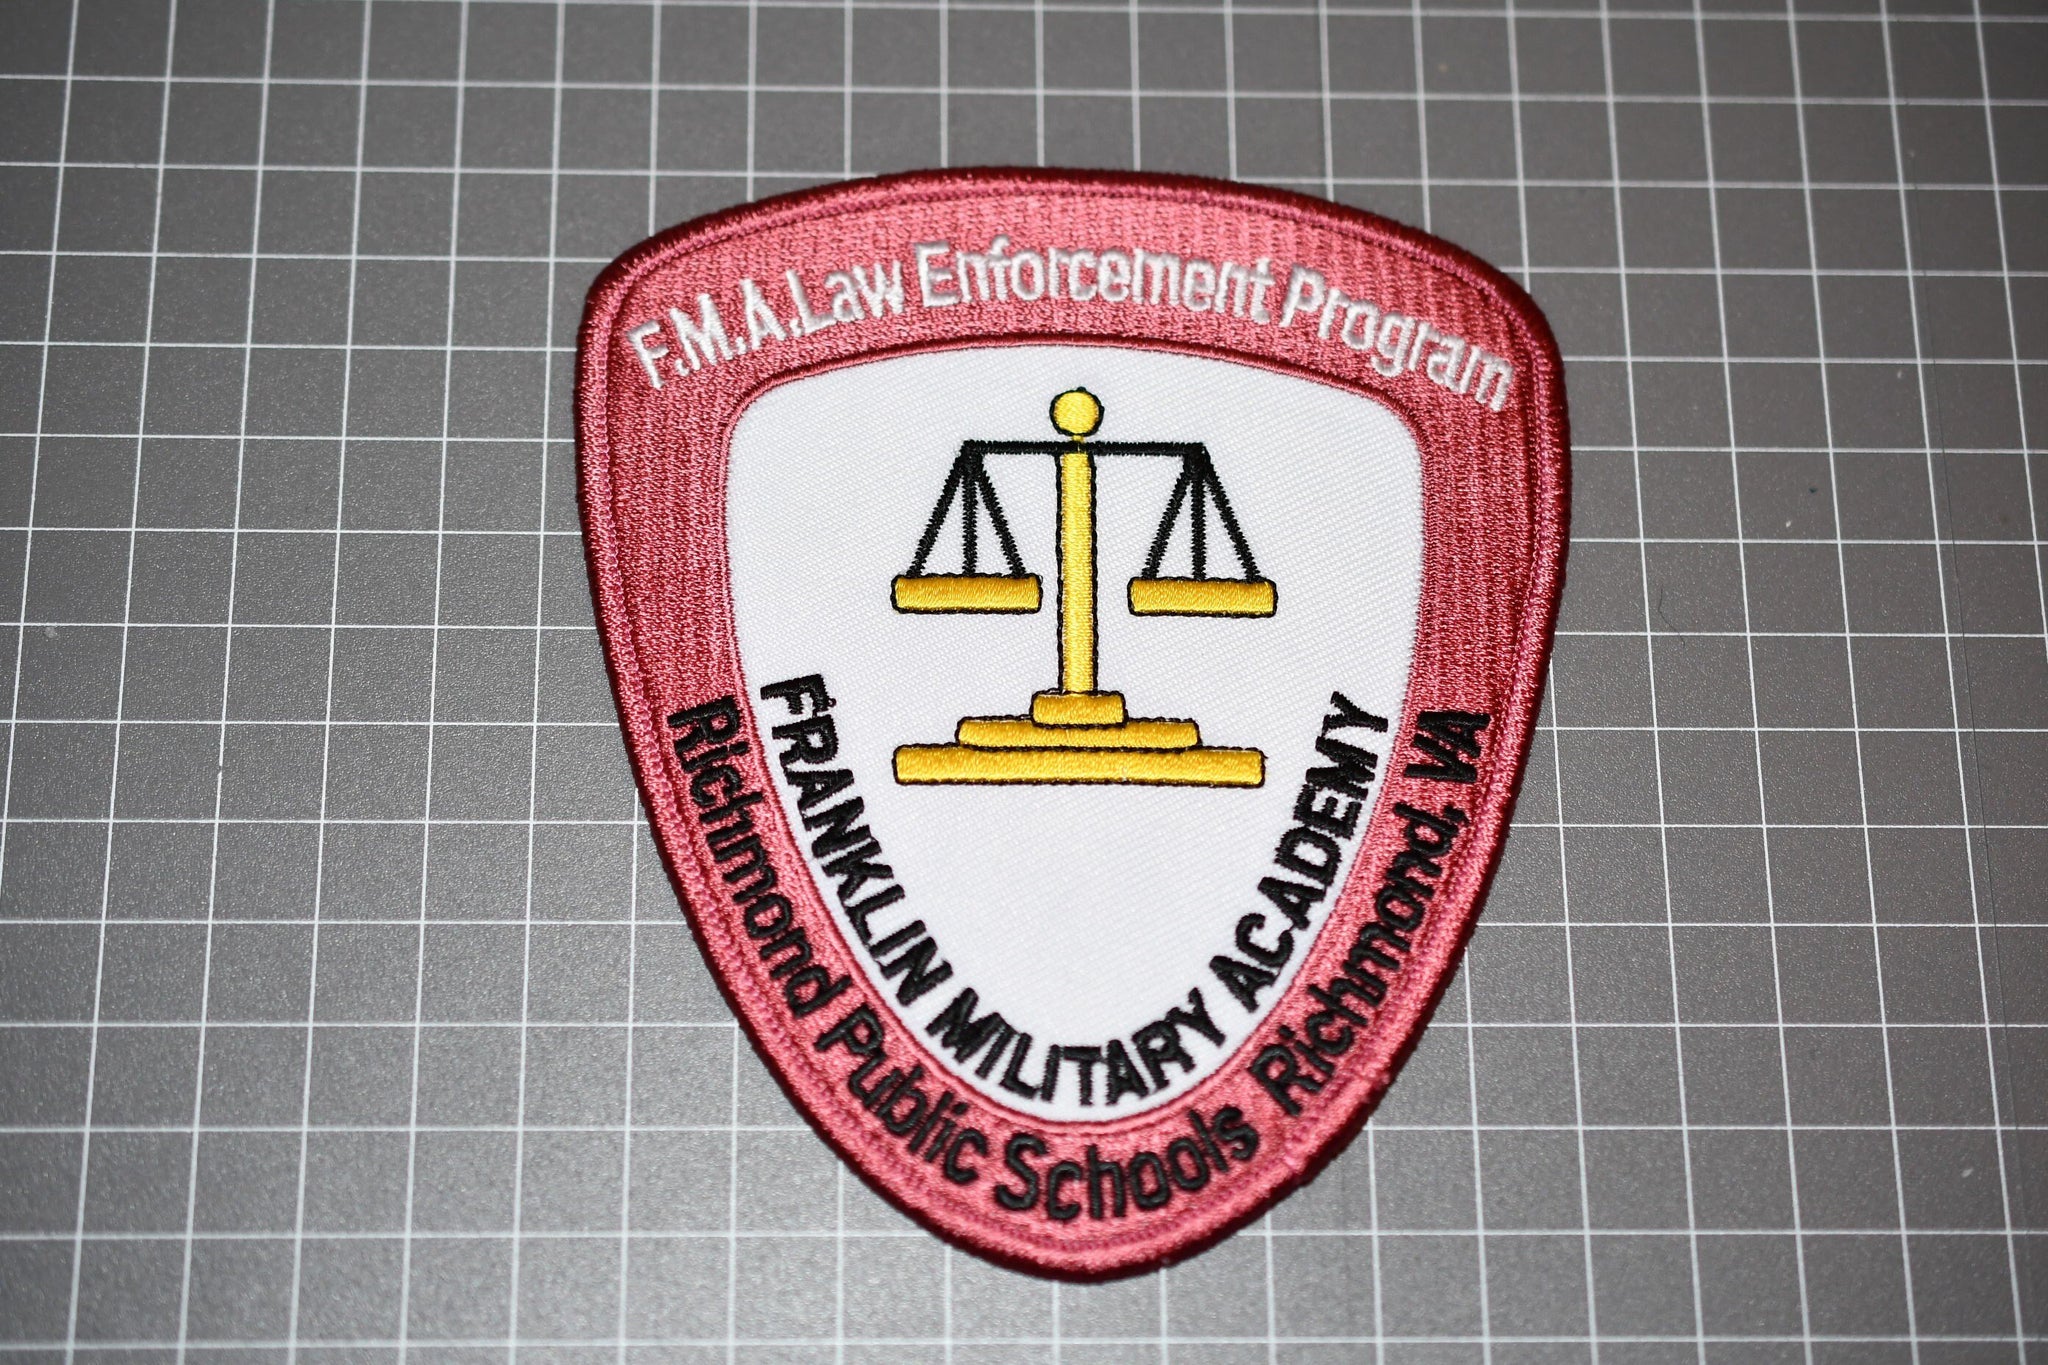 Franklin Military School Virginia Law Enforcement Program Patch (B8)